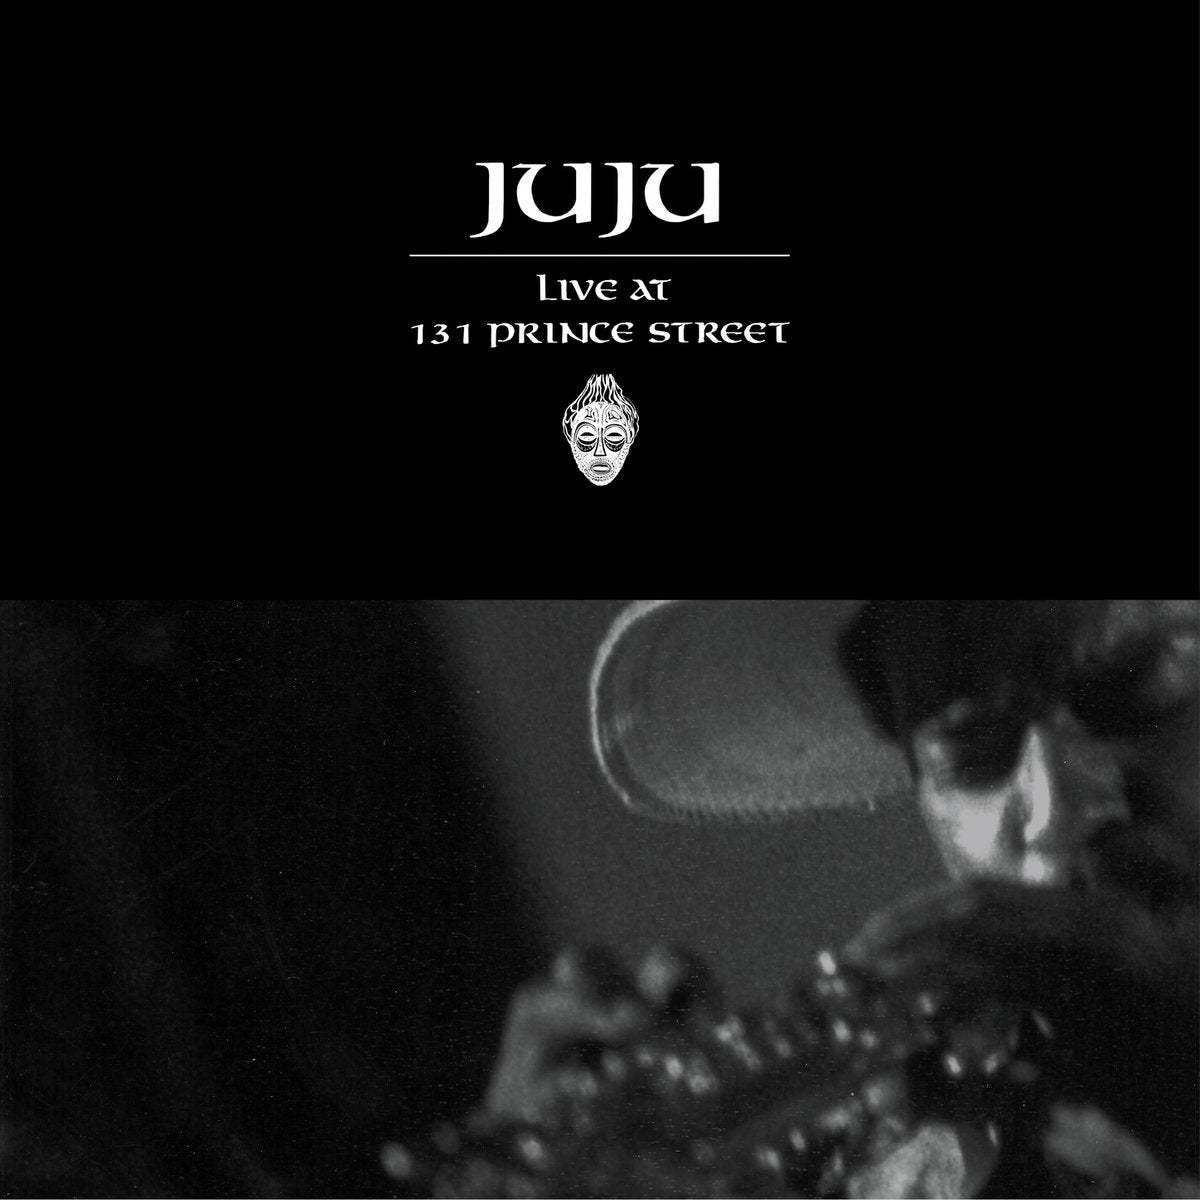 JUJU - Live at 131 Prince Street (2021 Remastered Edition) - 2LP - Vinyl